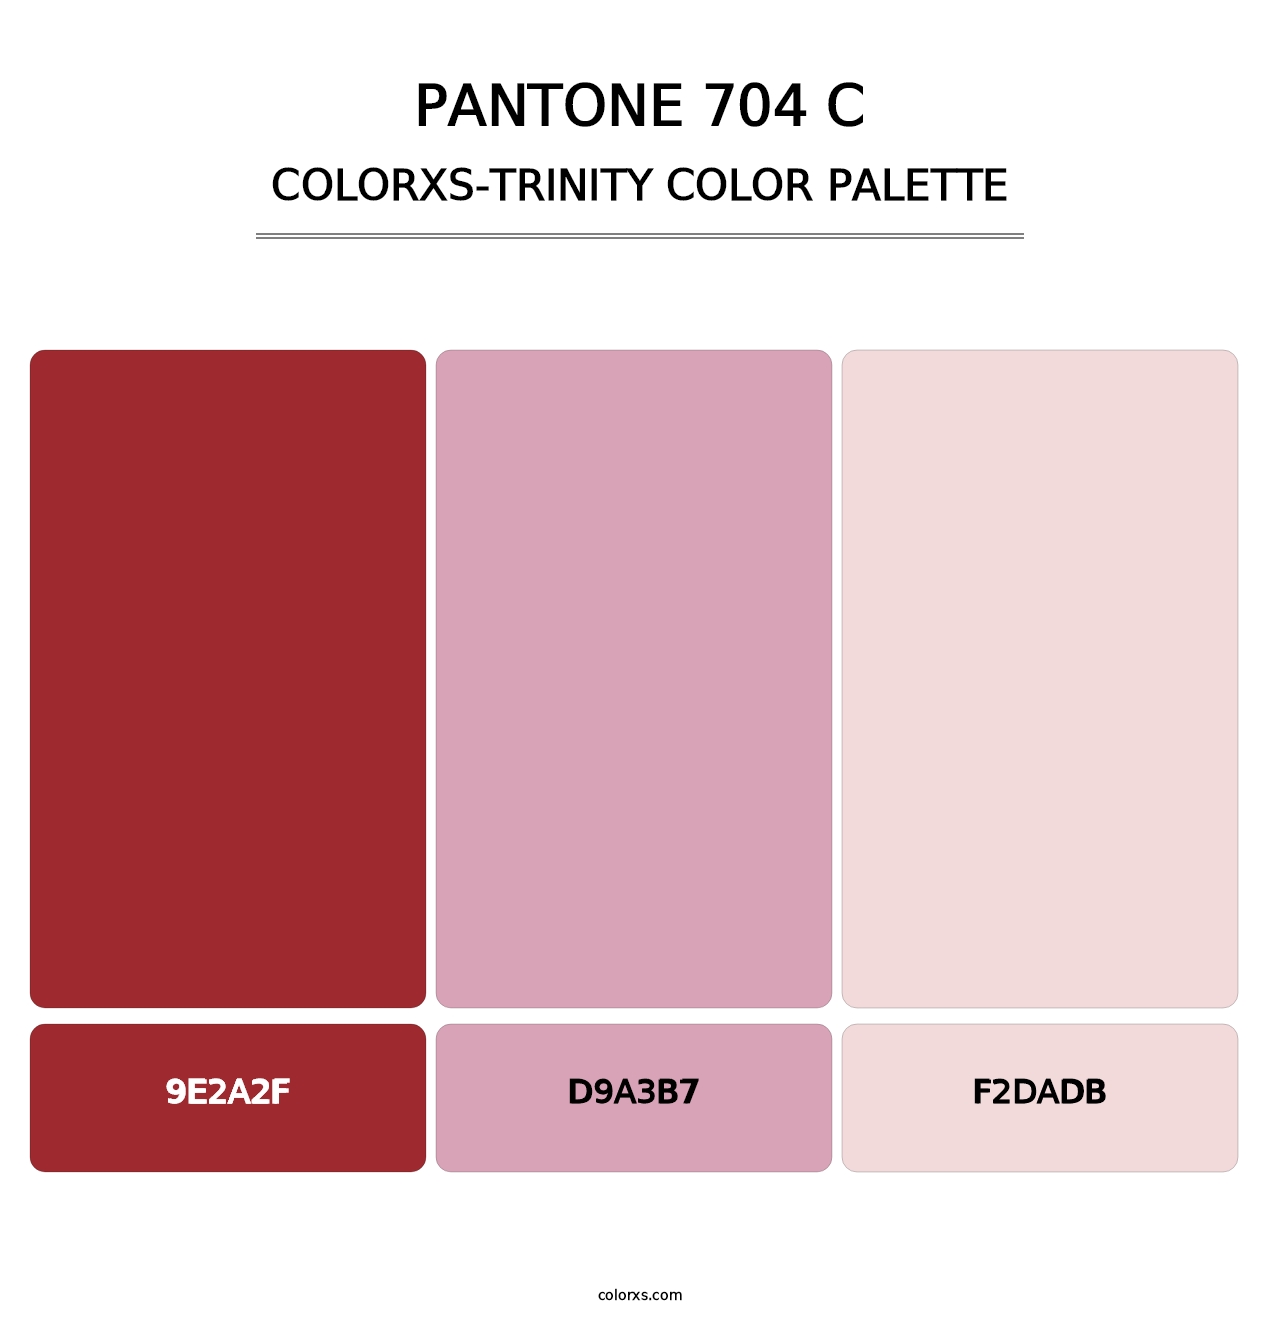 PANTONE 704 C - Colorxs Trinity Palette